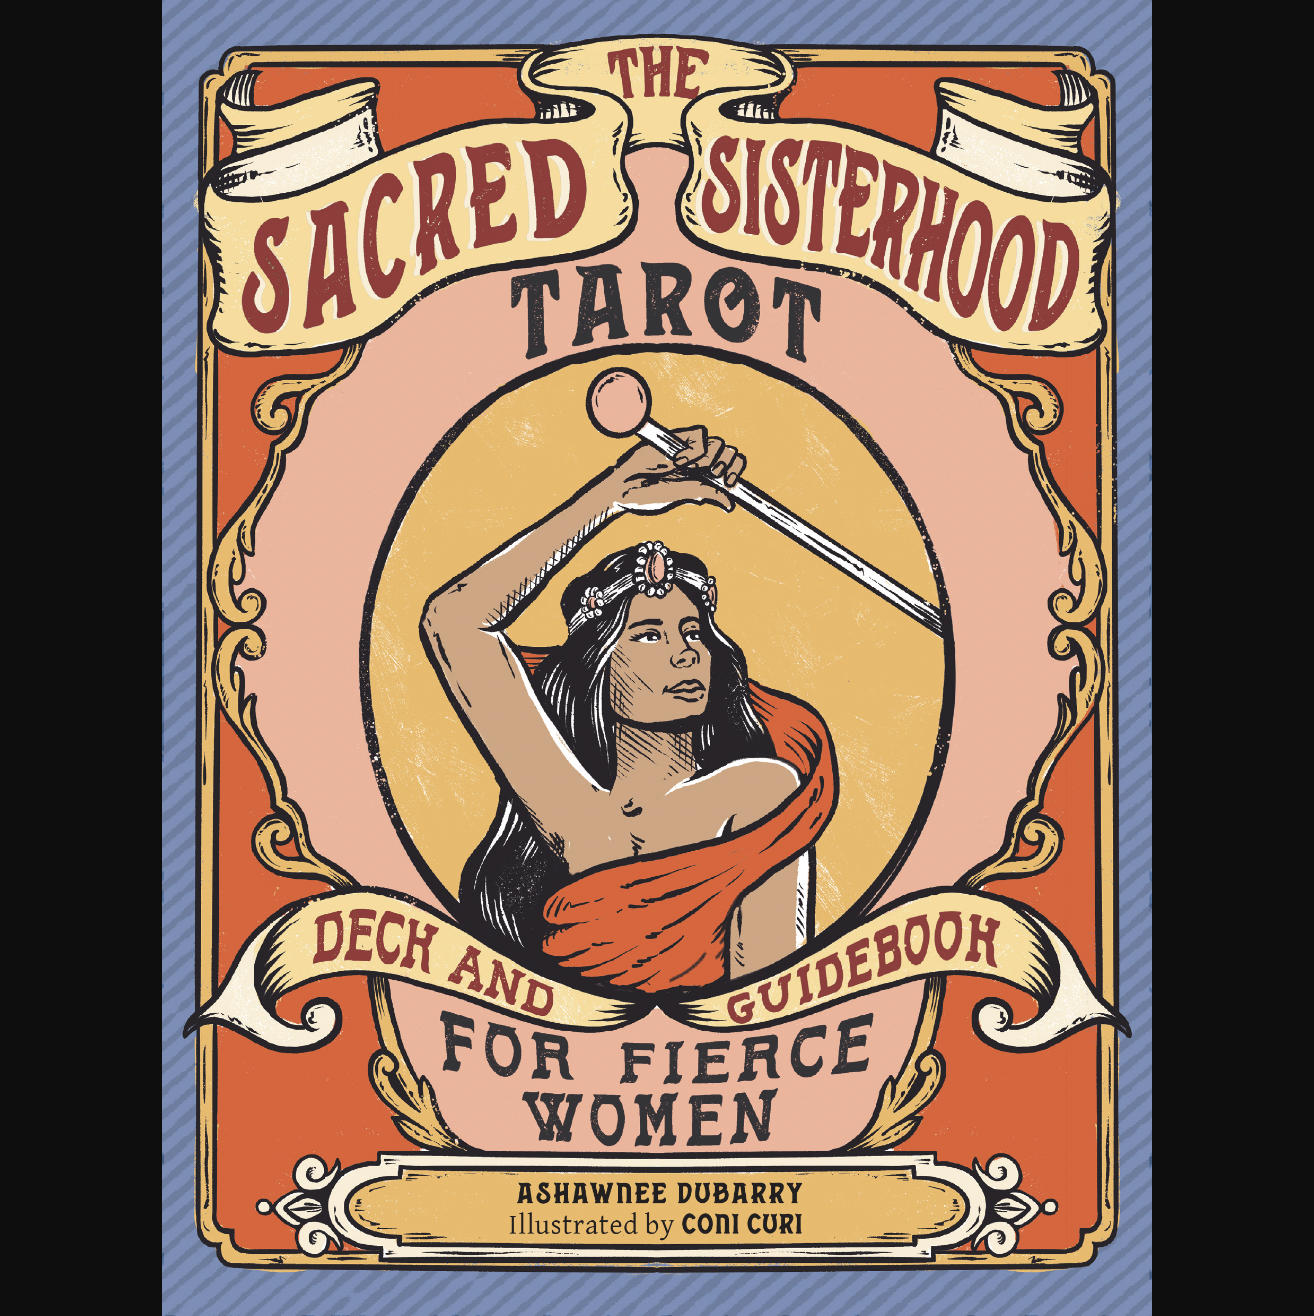 The Sacred Sisterhood Tarot Deck and Guidebook for Fierce Women by Ashawnee DuBarry